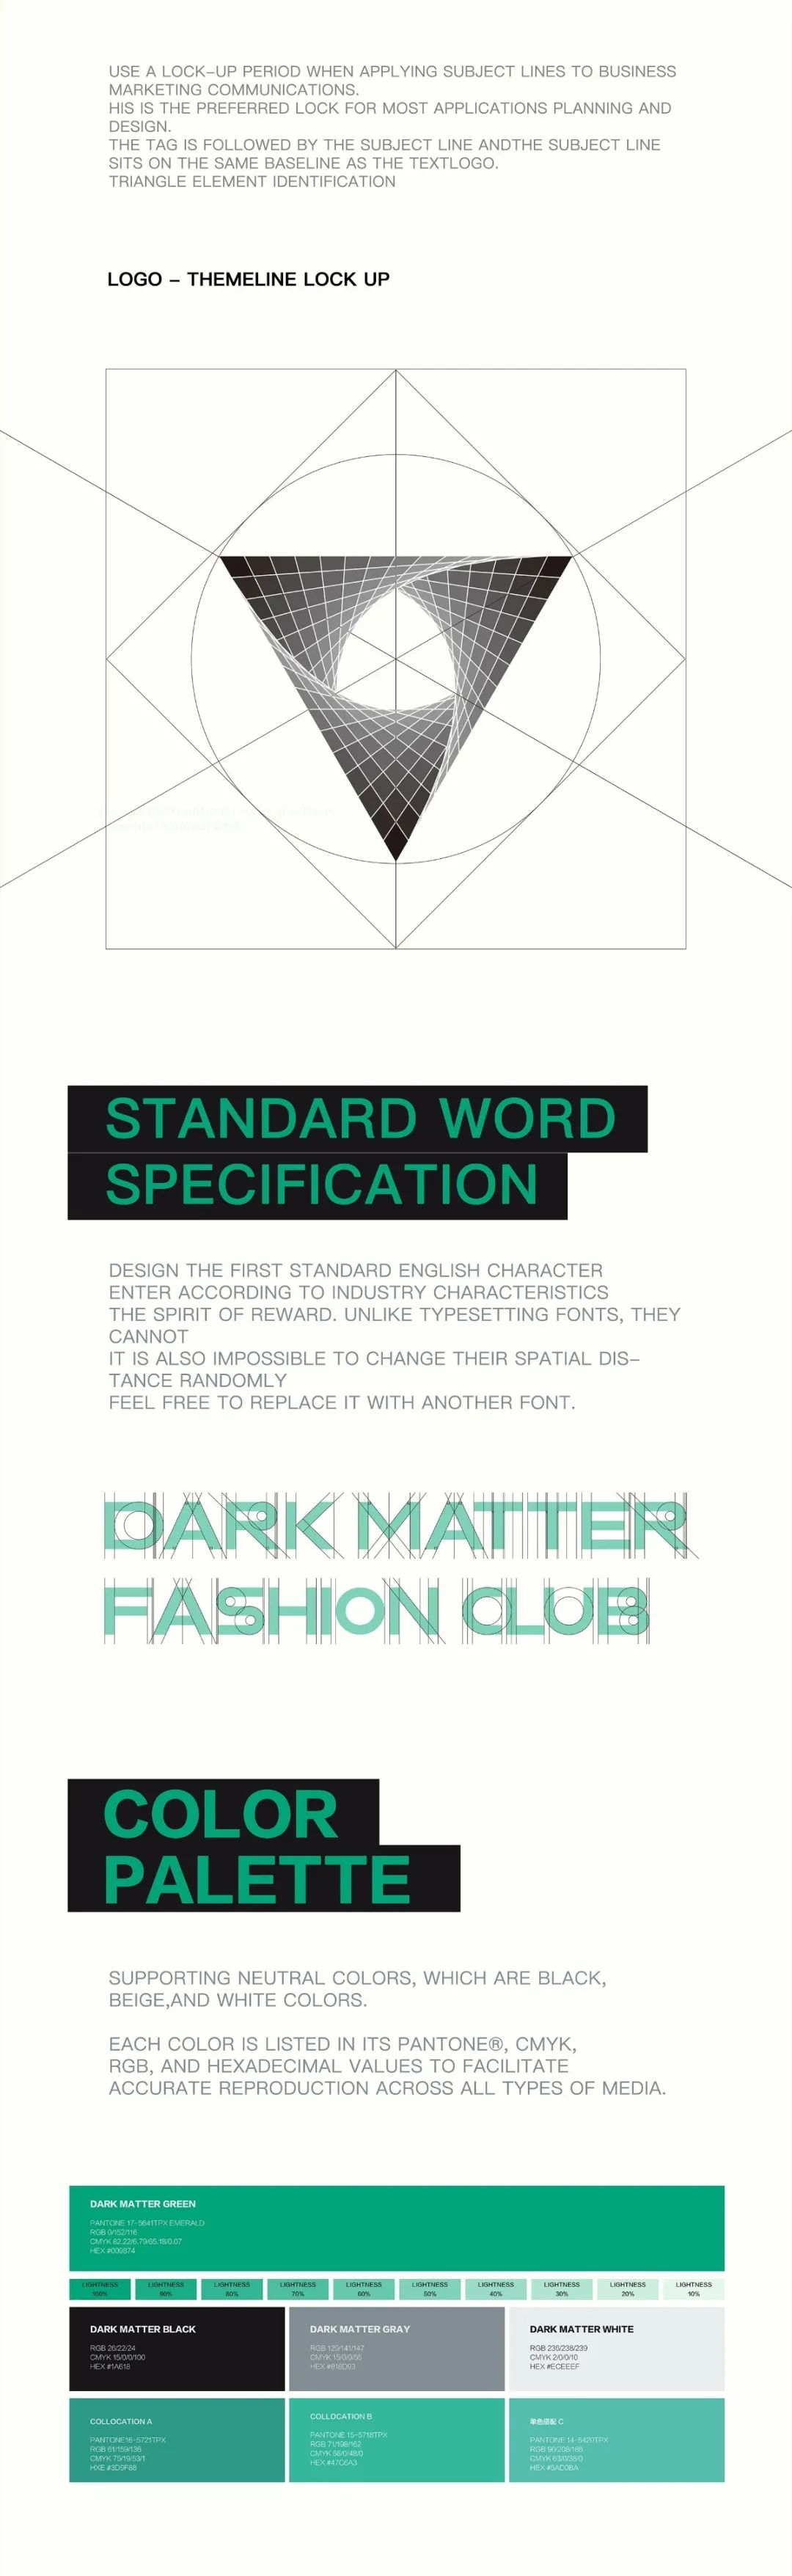 DARK MATTER｜视觉识别系统 Visual identity system-东莞DM酒吧/DM CLUB/Dark Matter